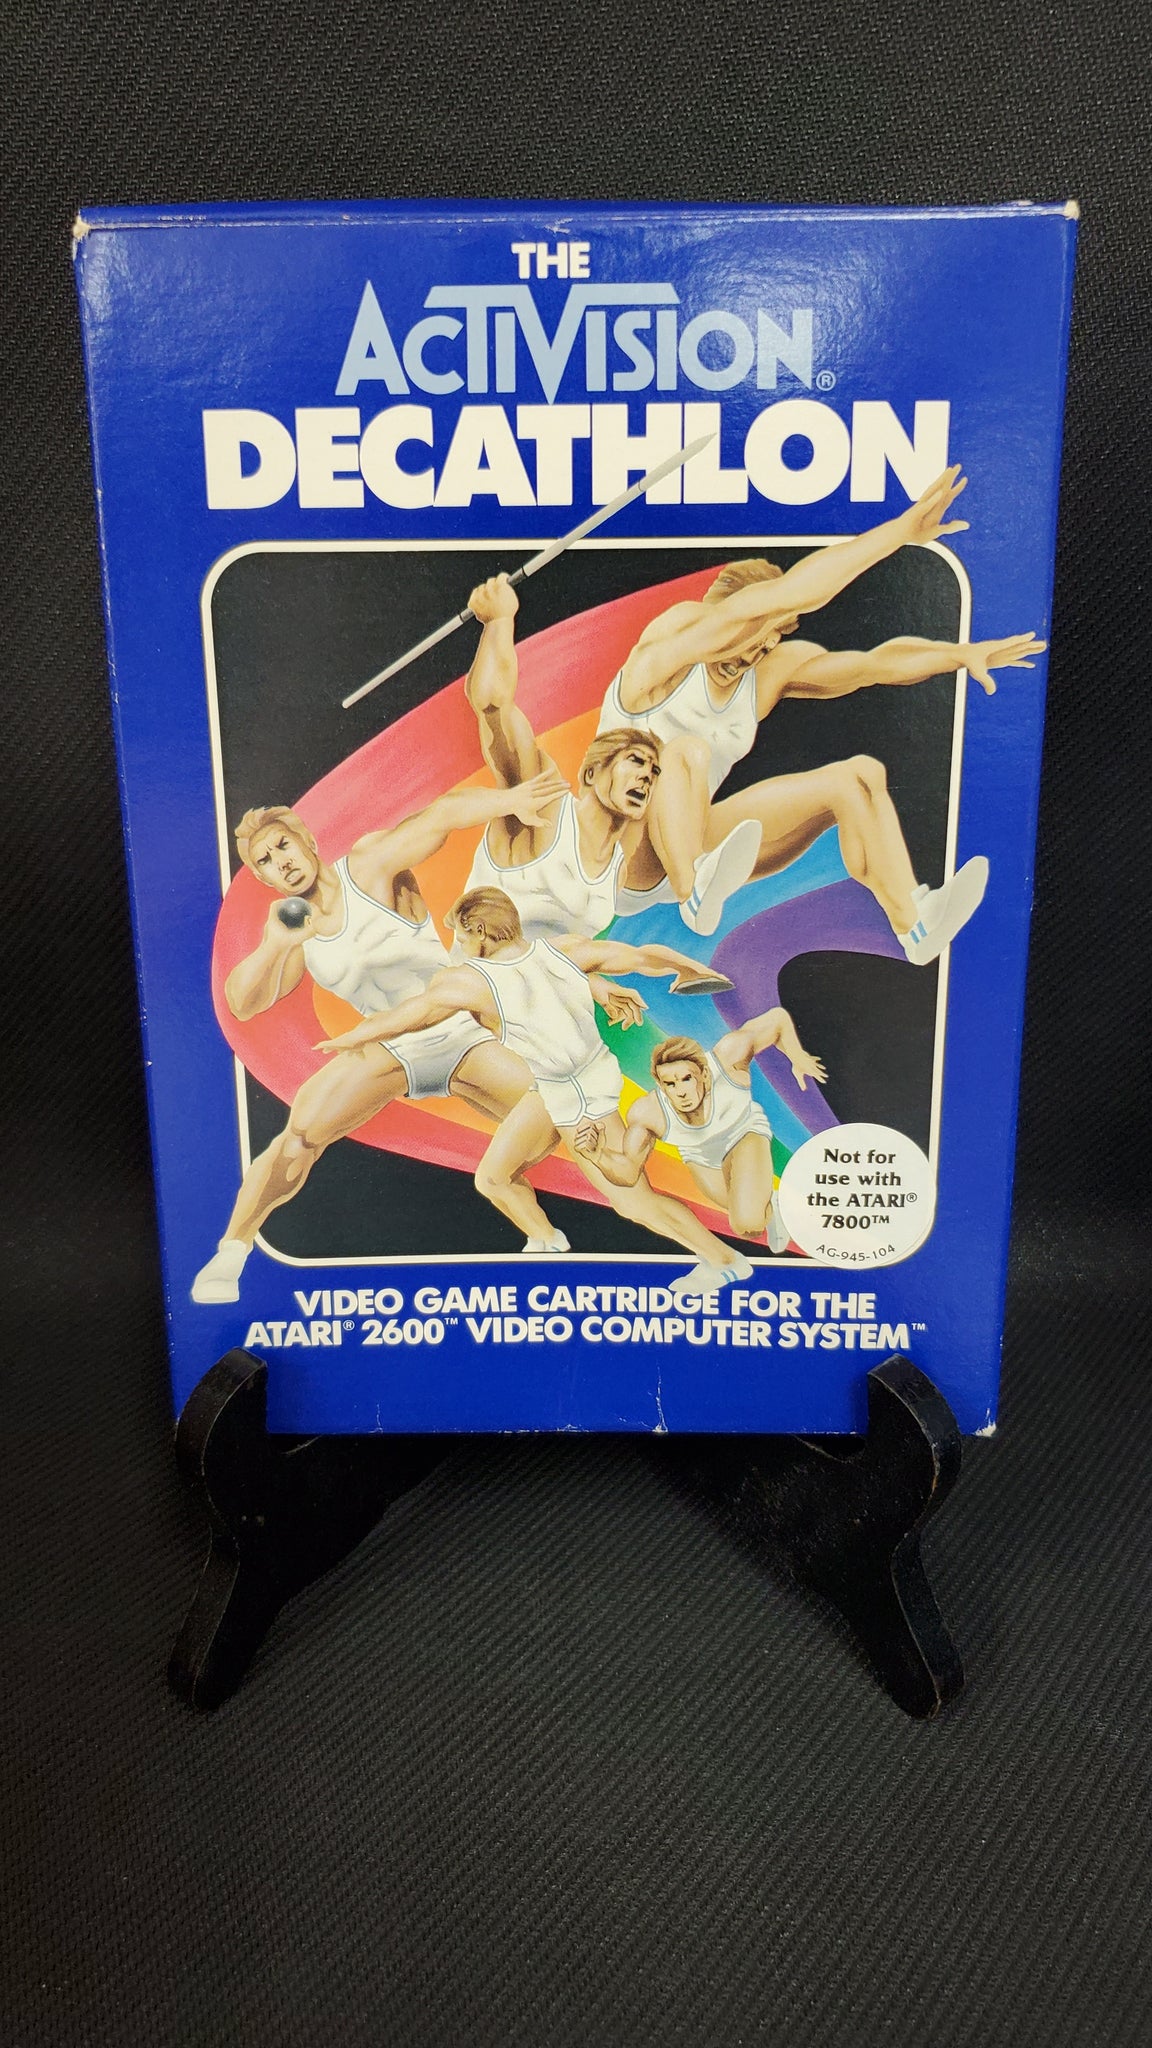 History, Origins and Brand Portfolio of Decathlon